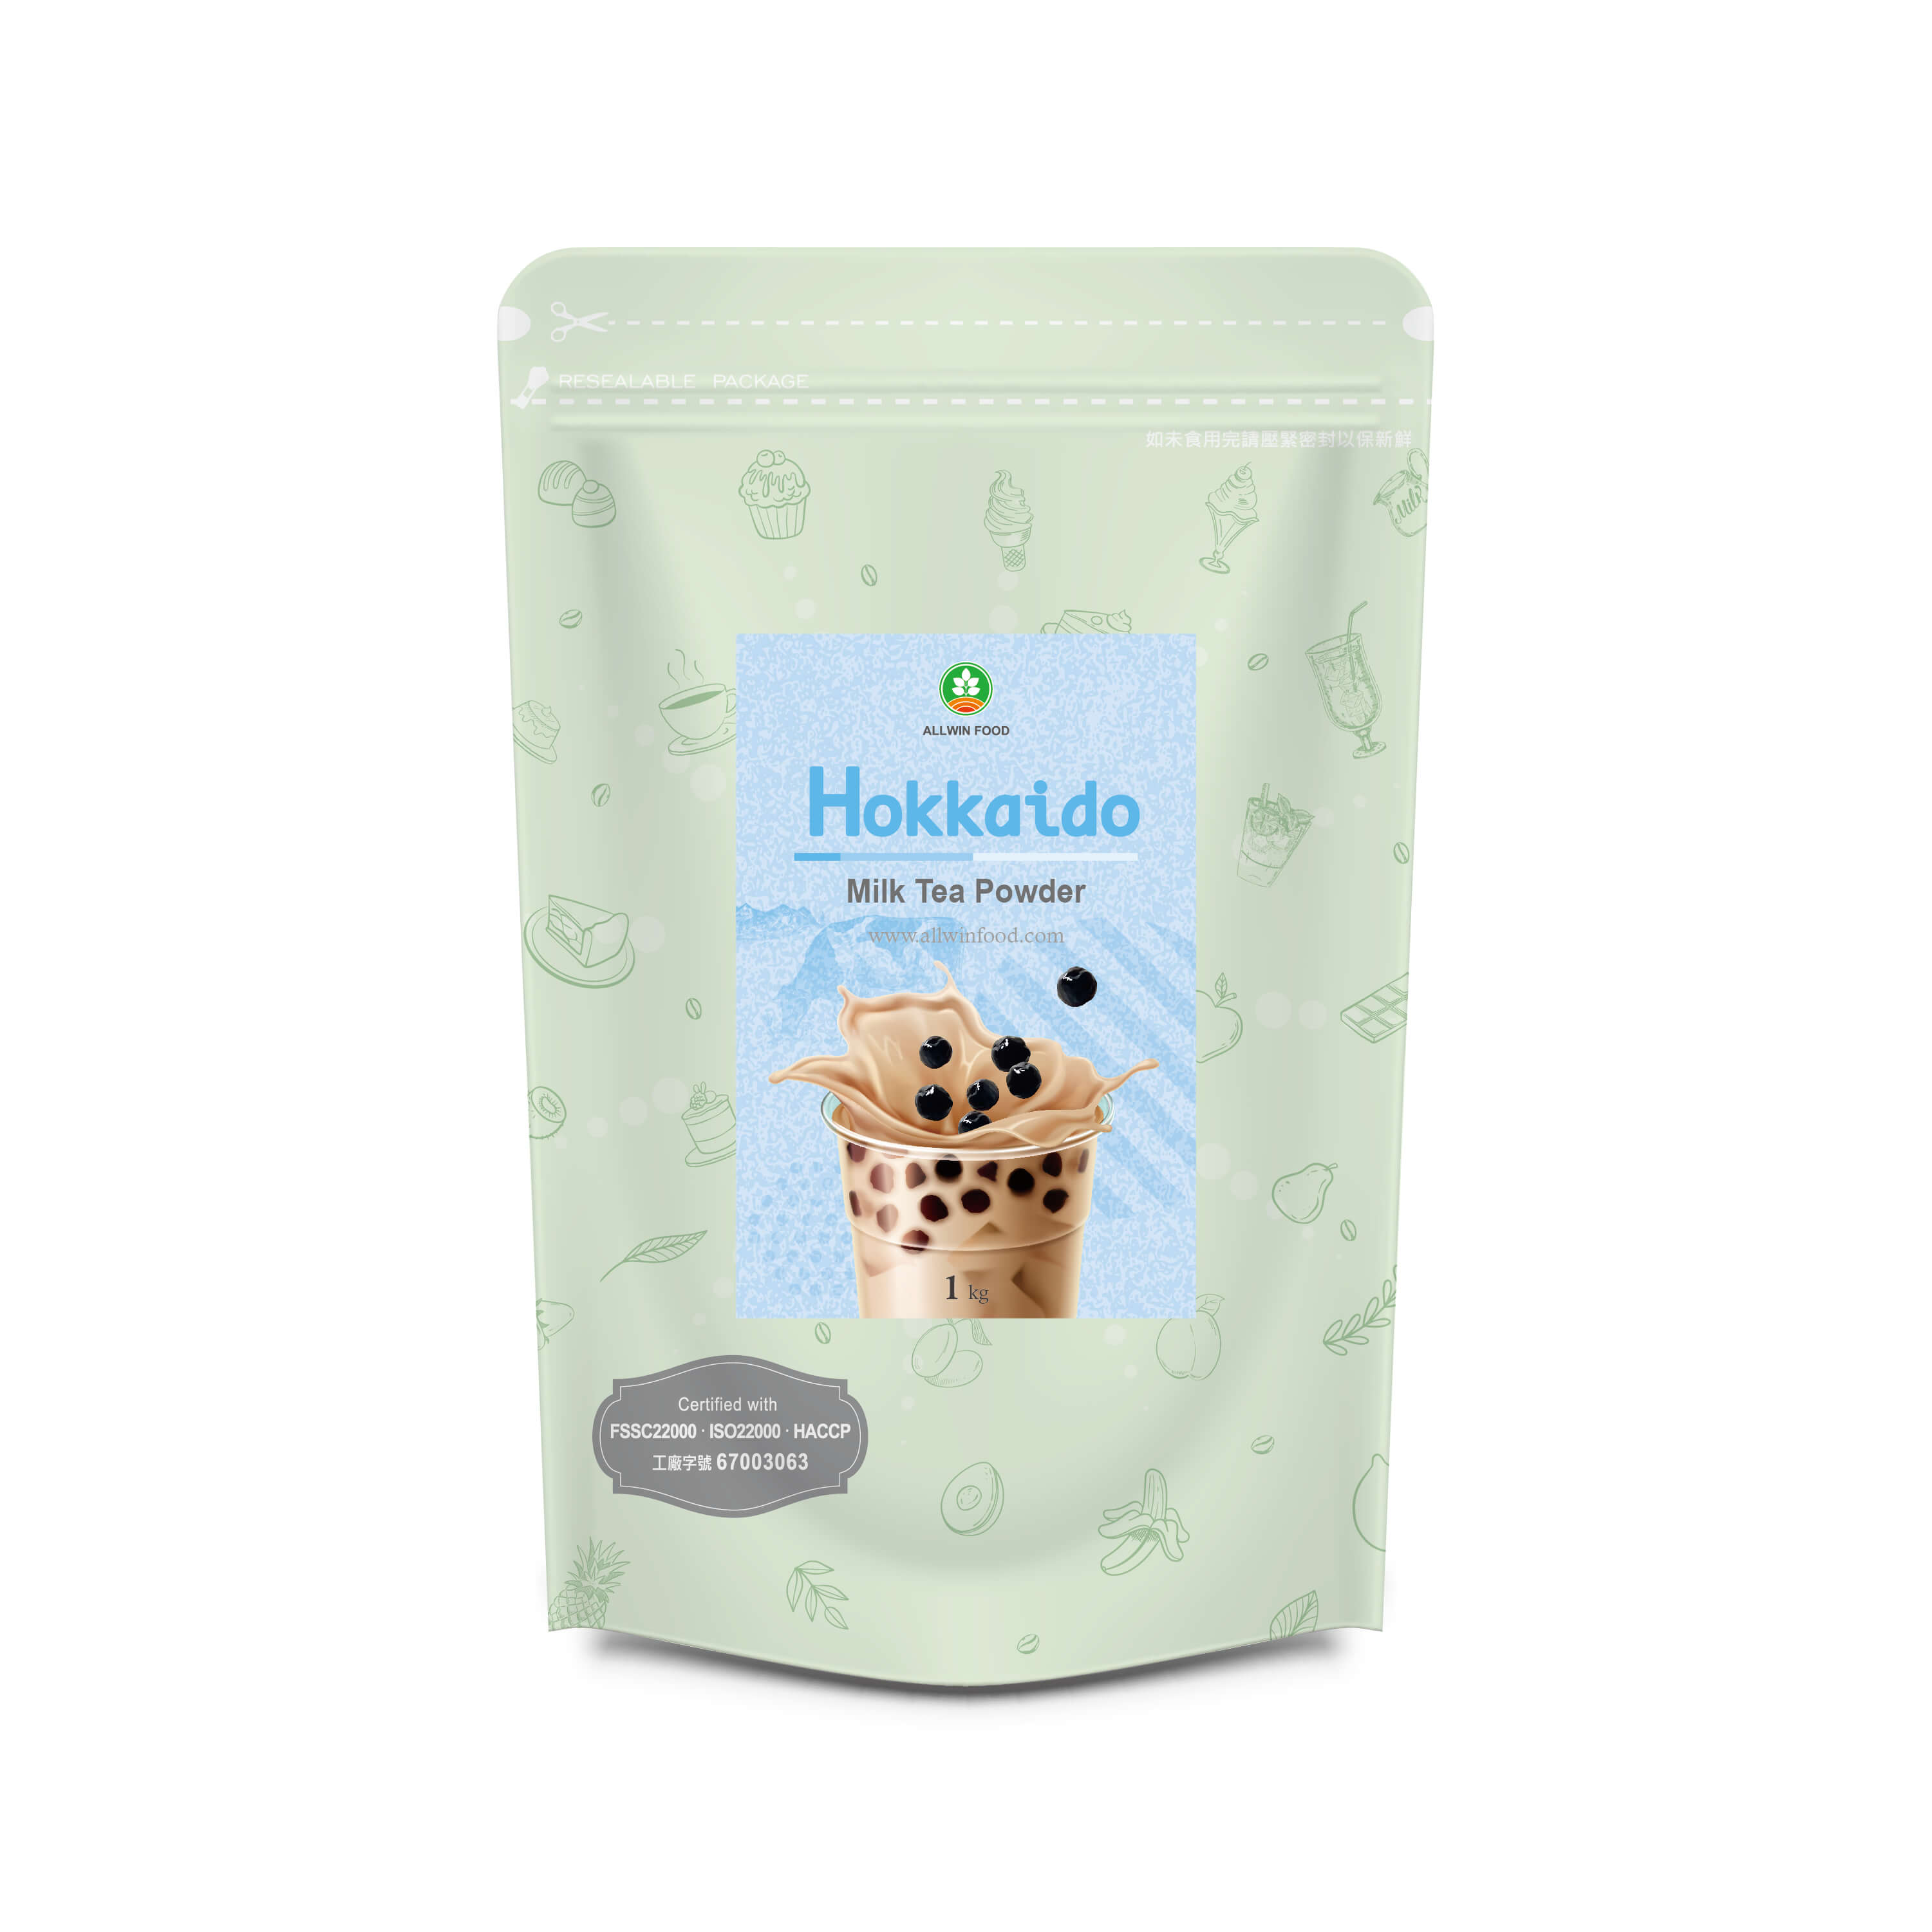 Hokkaido Milk Tea Powder Supplier